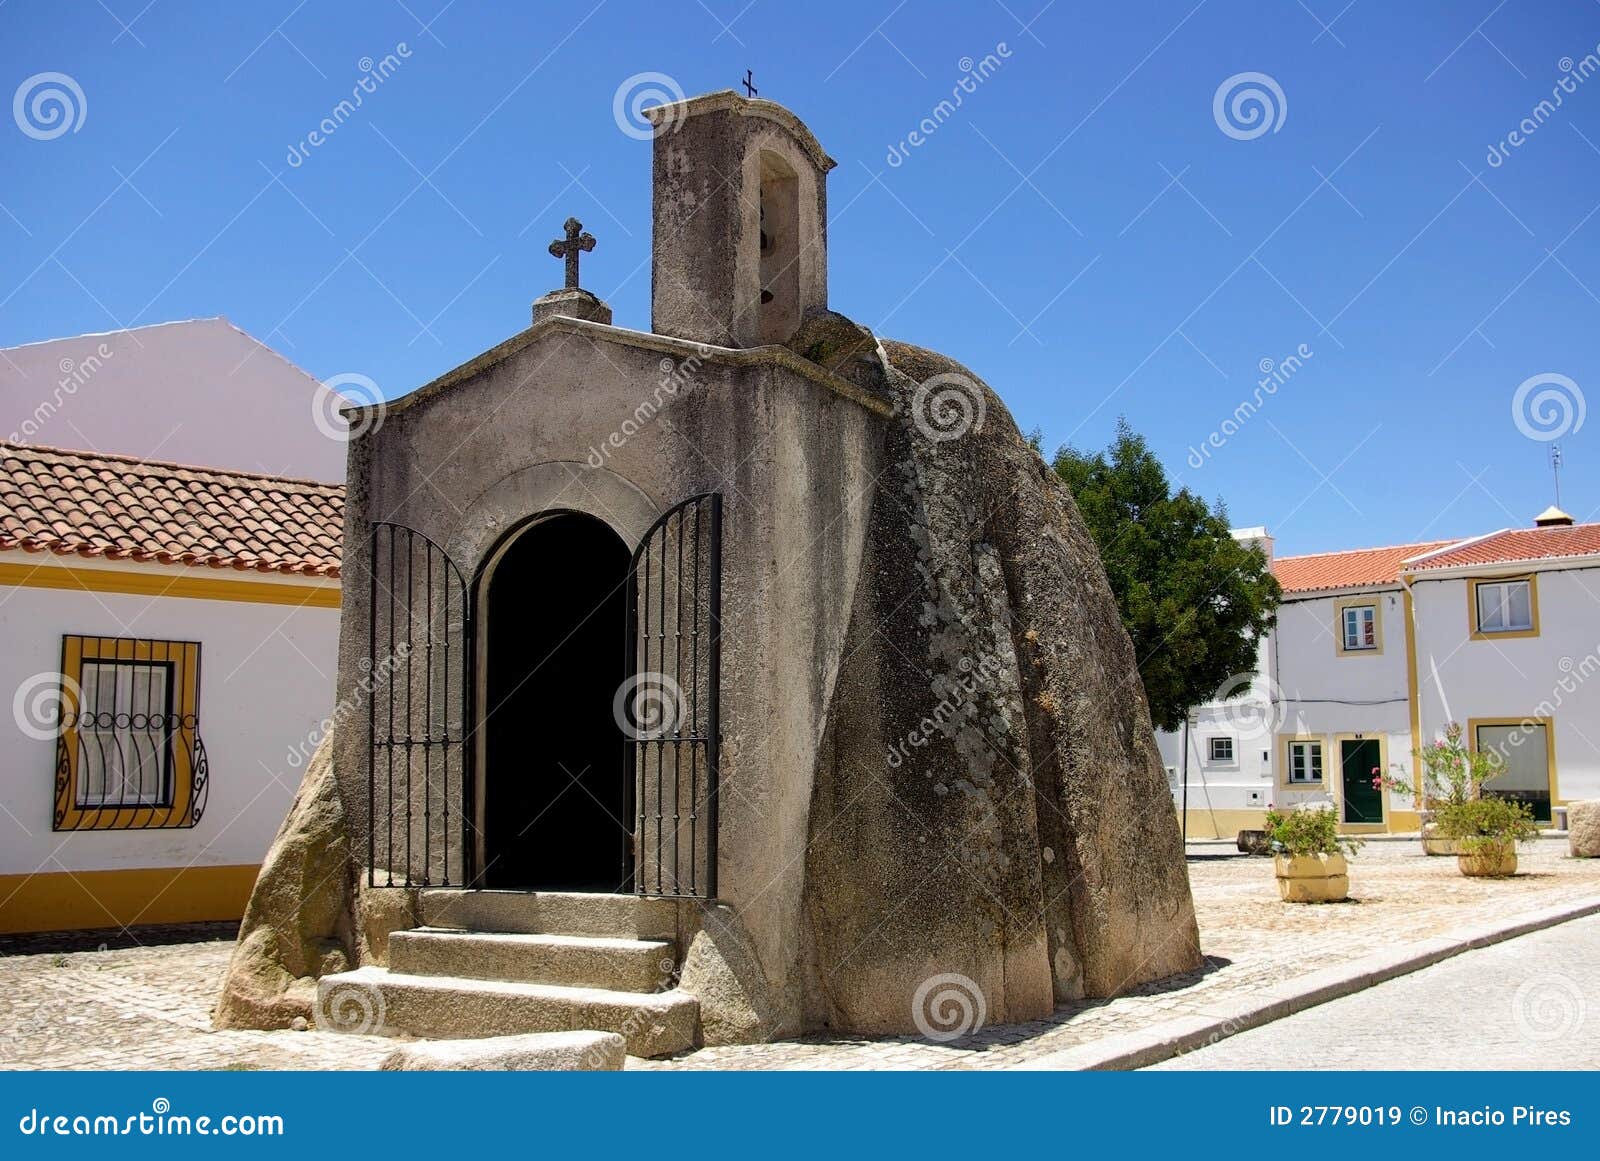 church from megalÃÂ­tic